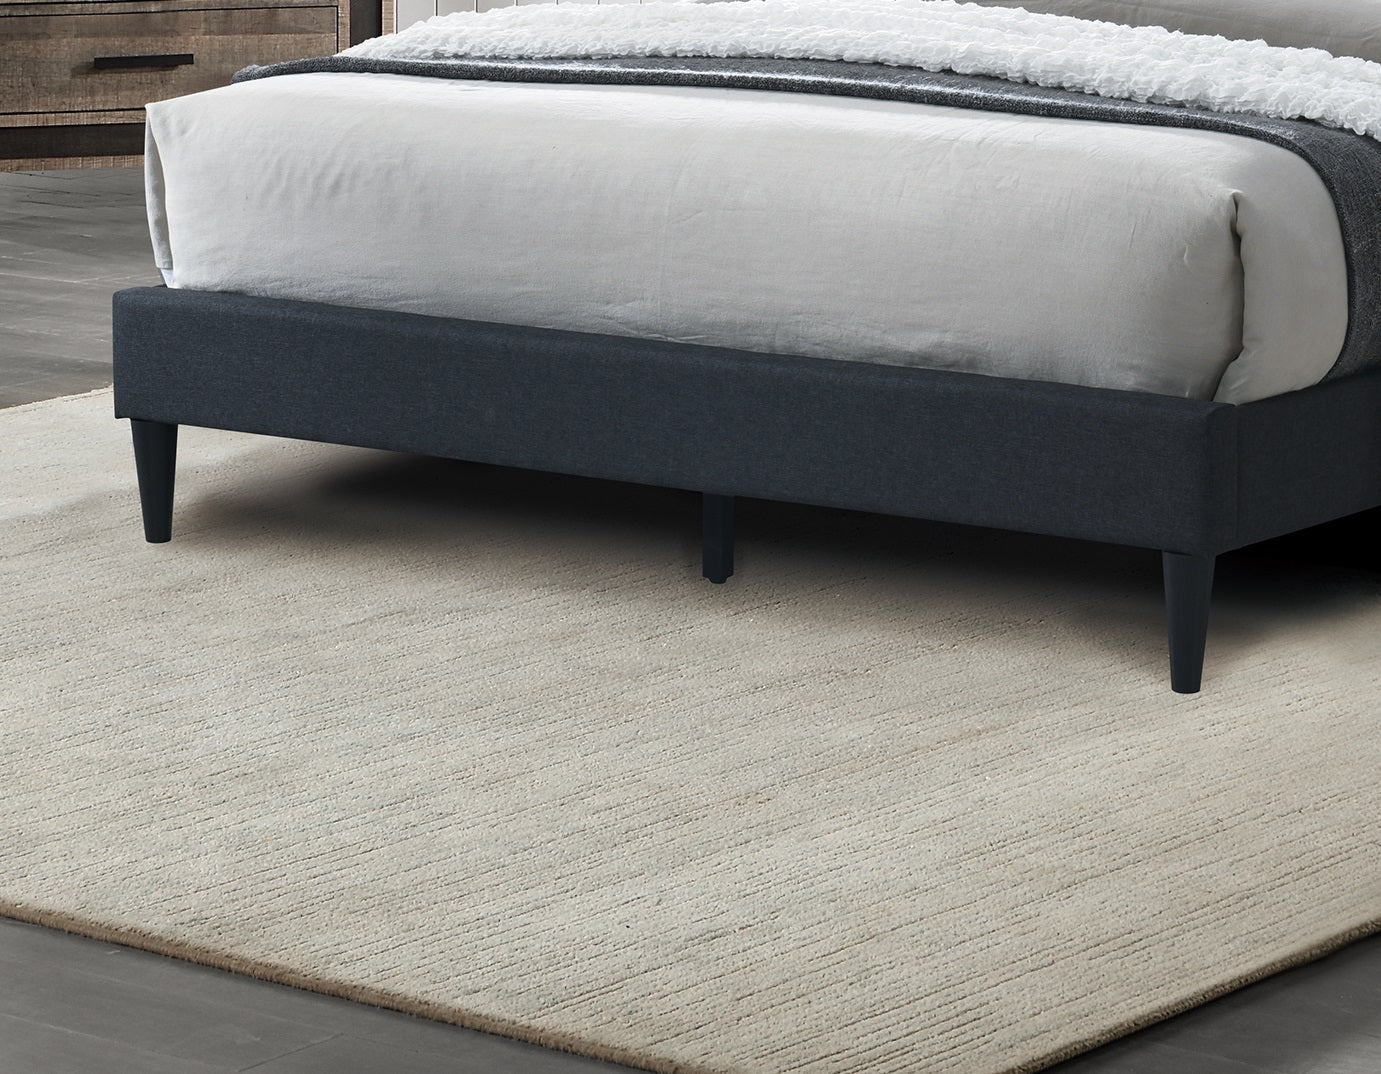 Charcoal Color 1pc Queen Size Bed Burlap Fabric Headboard Upholstered Bedroom Furniture Platform Bedframe